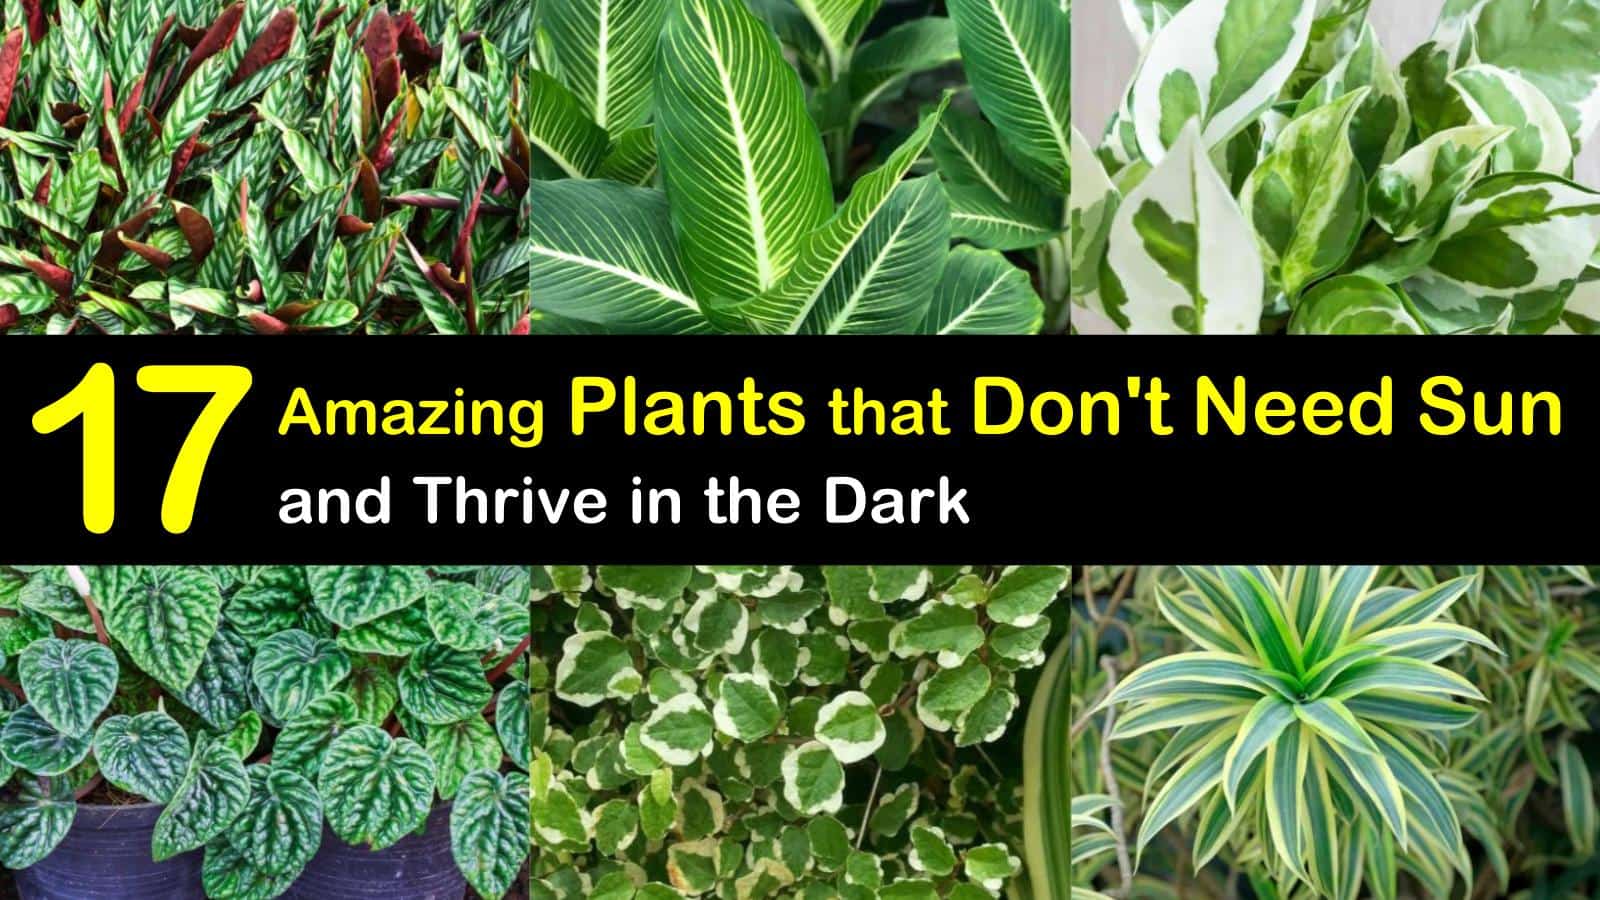 plants that don't need sun titleimg1